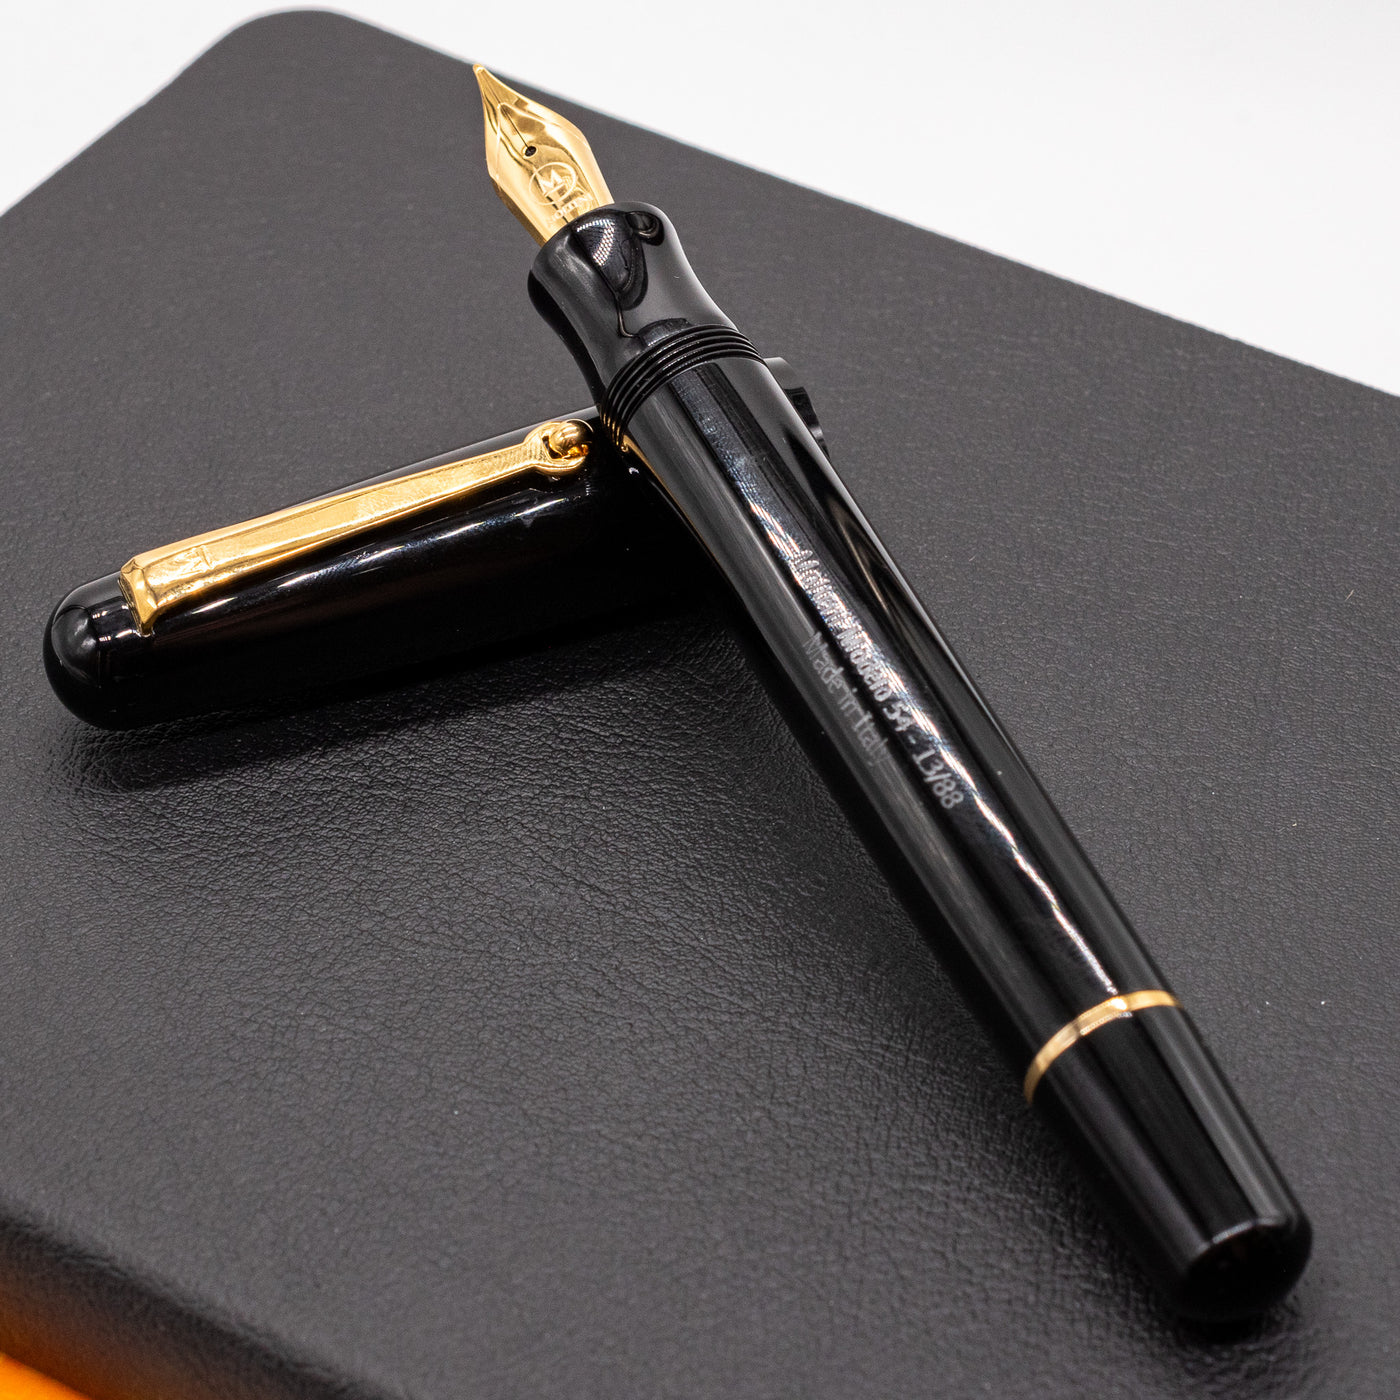 Molteni Modelo 54 Fountain Pen - Jet Black & Gold piston filled